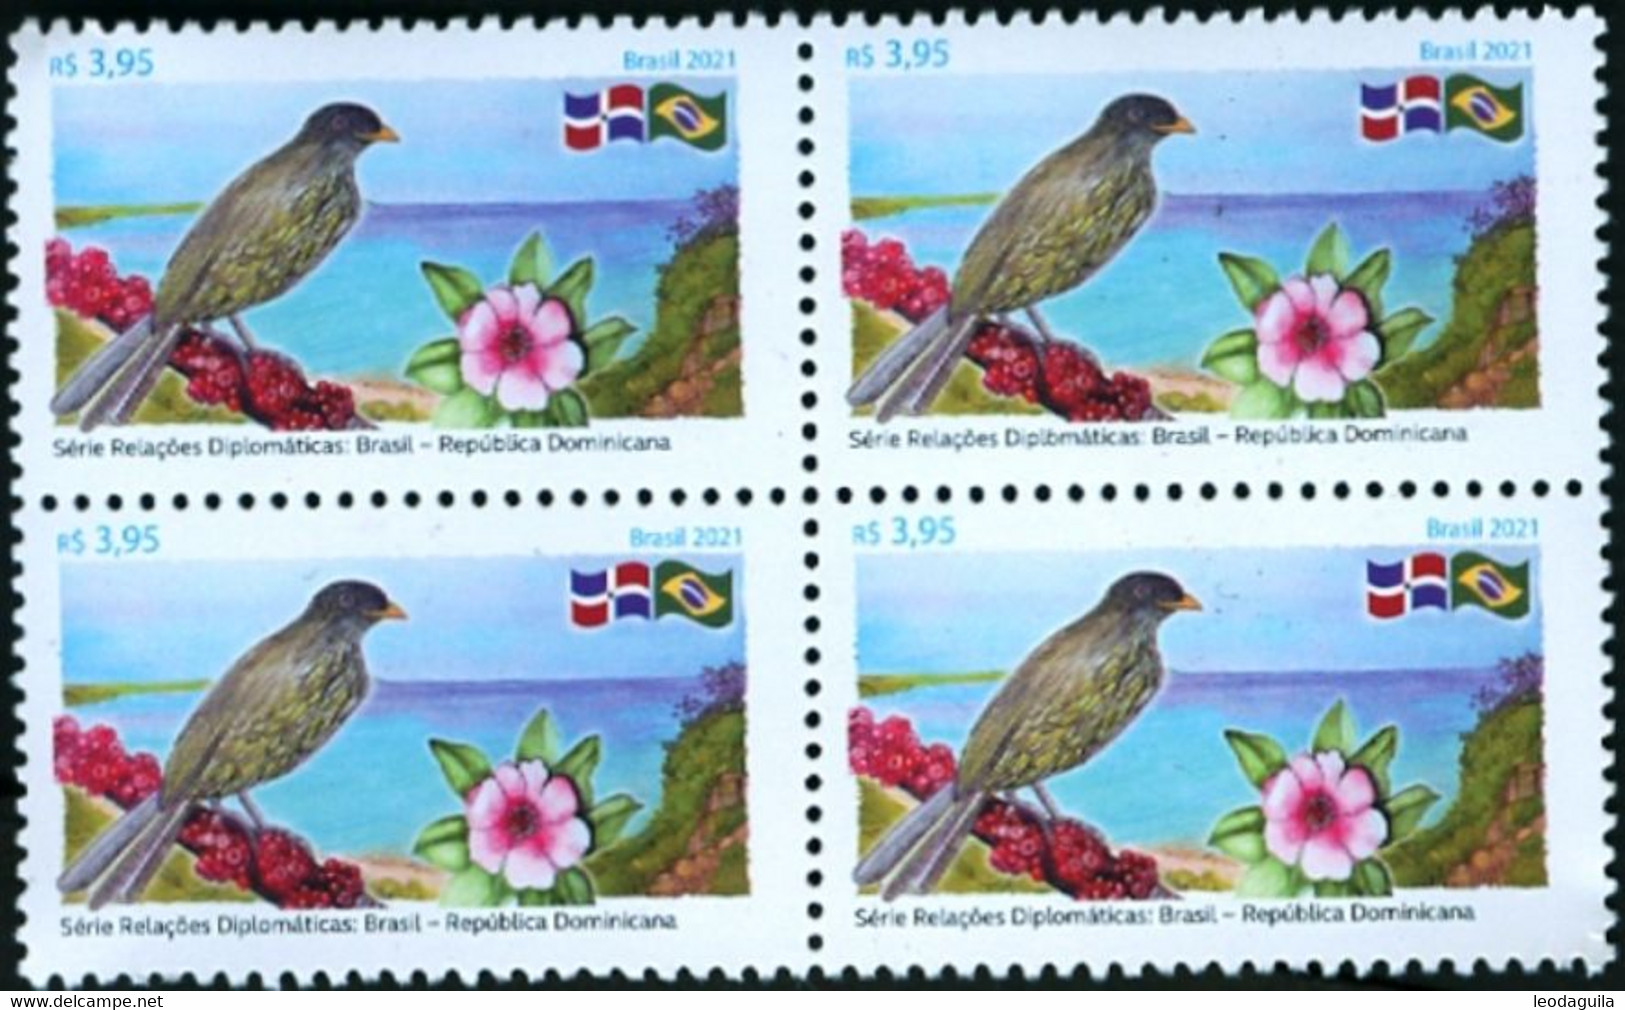 BRAZIL #4816 - BIRD PALMCHAT / CIGUA PALMERA  - LANDSCAPE - FLOWER  - BLOCK OF 4  - 2021 - MINT - Ungebraucht